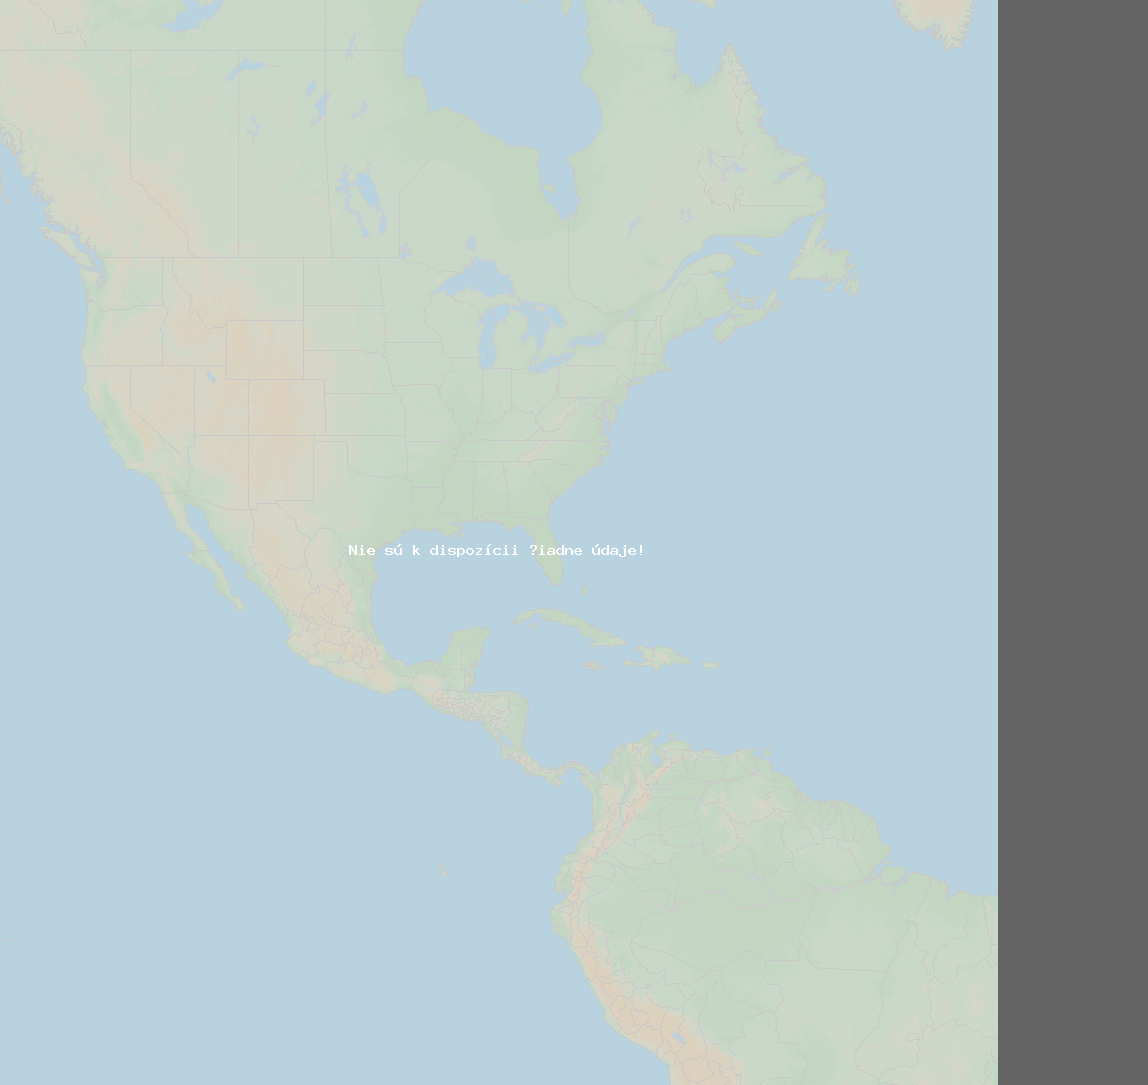 Pomer bleskov (Stanica indianapolis) North America 2021 Júl